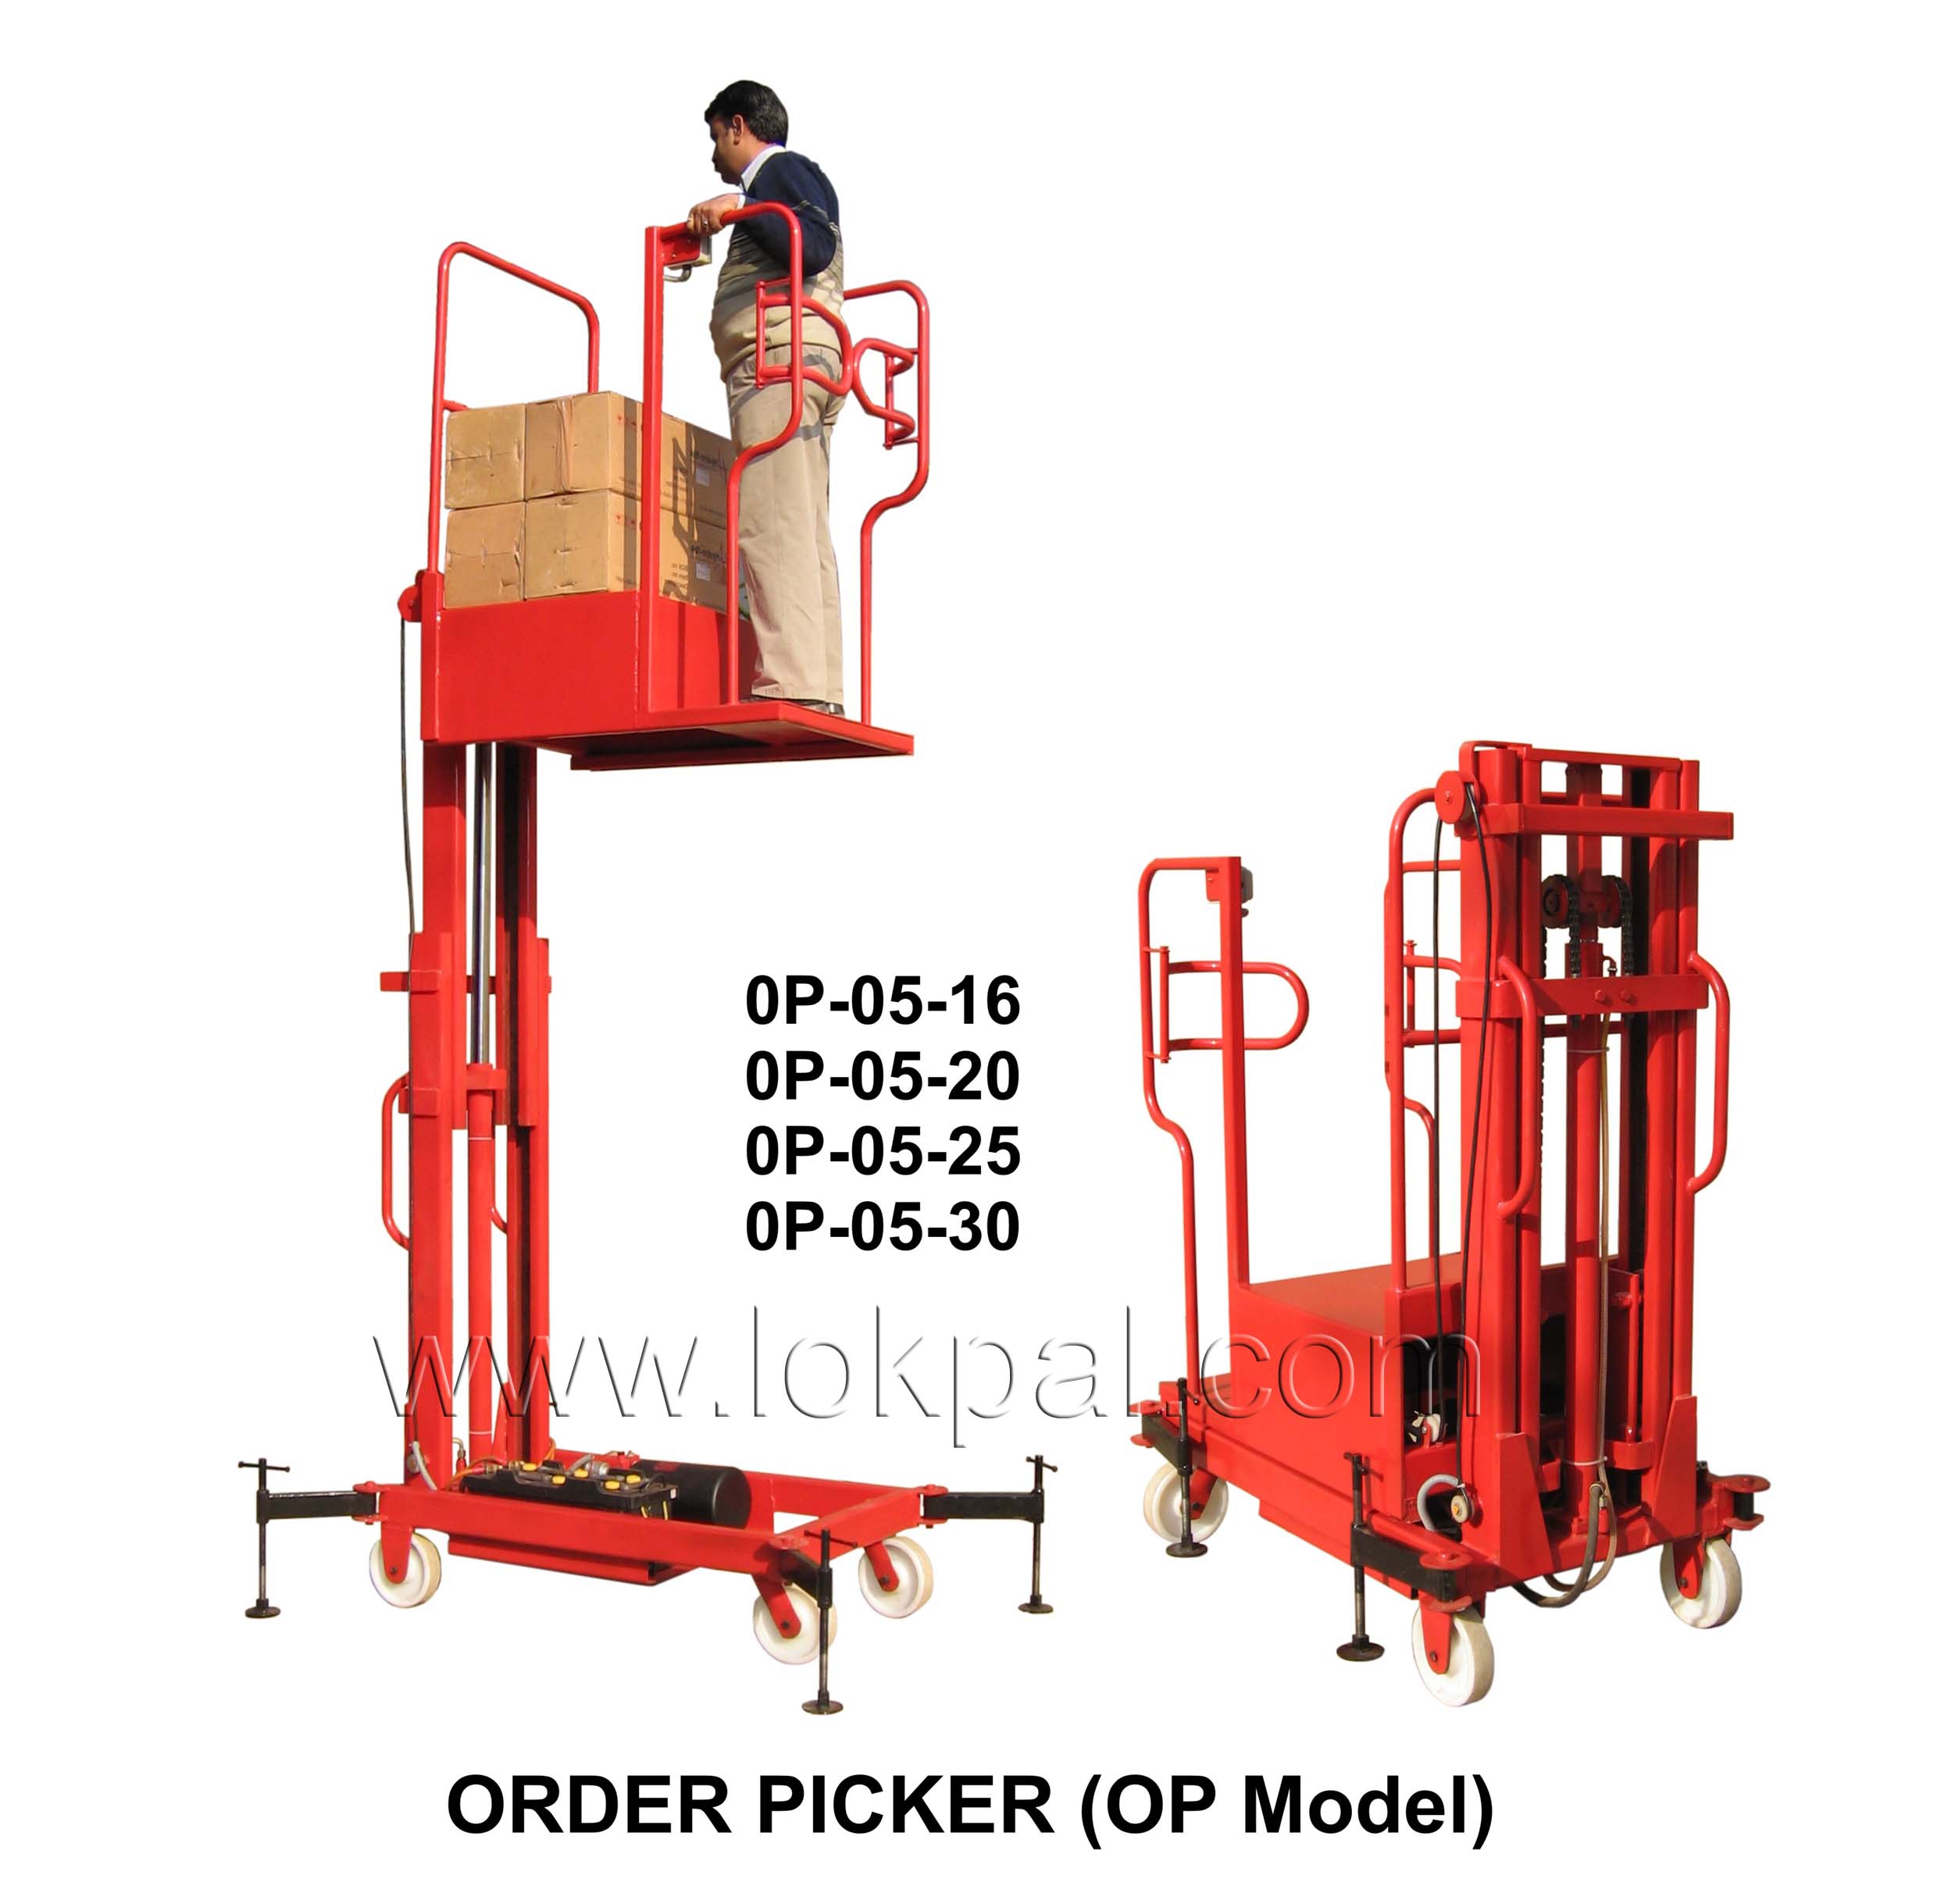 Order Picker, Manufacturer, Good Lifts Supplier, India